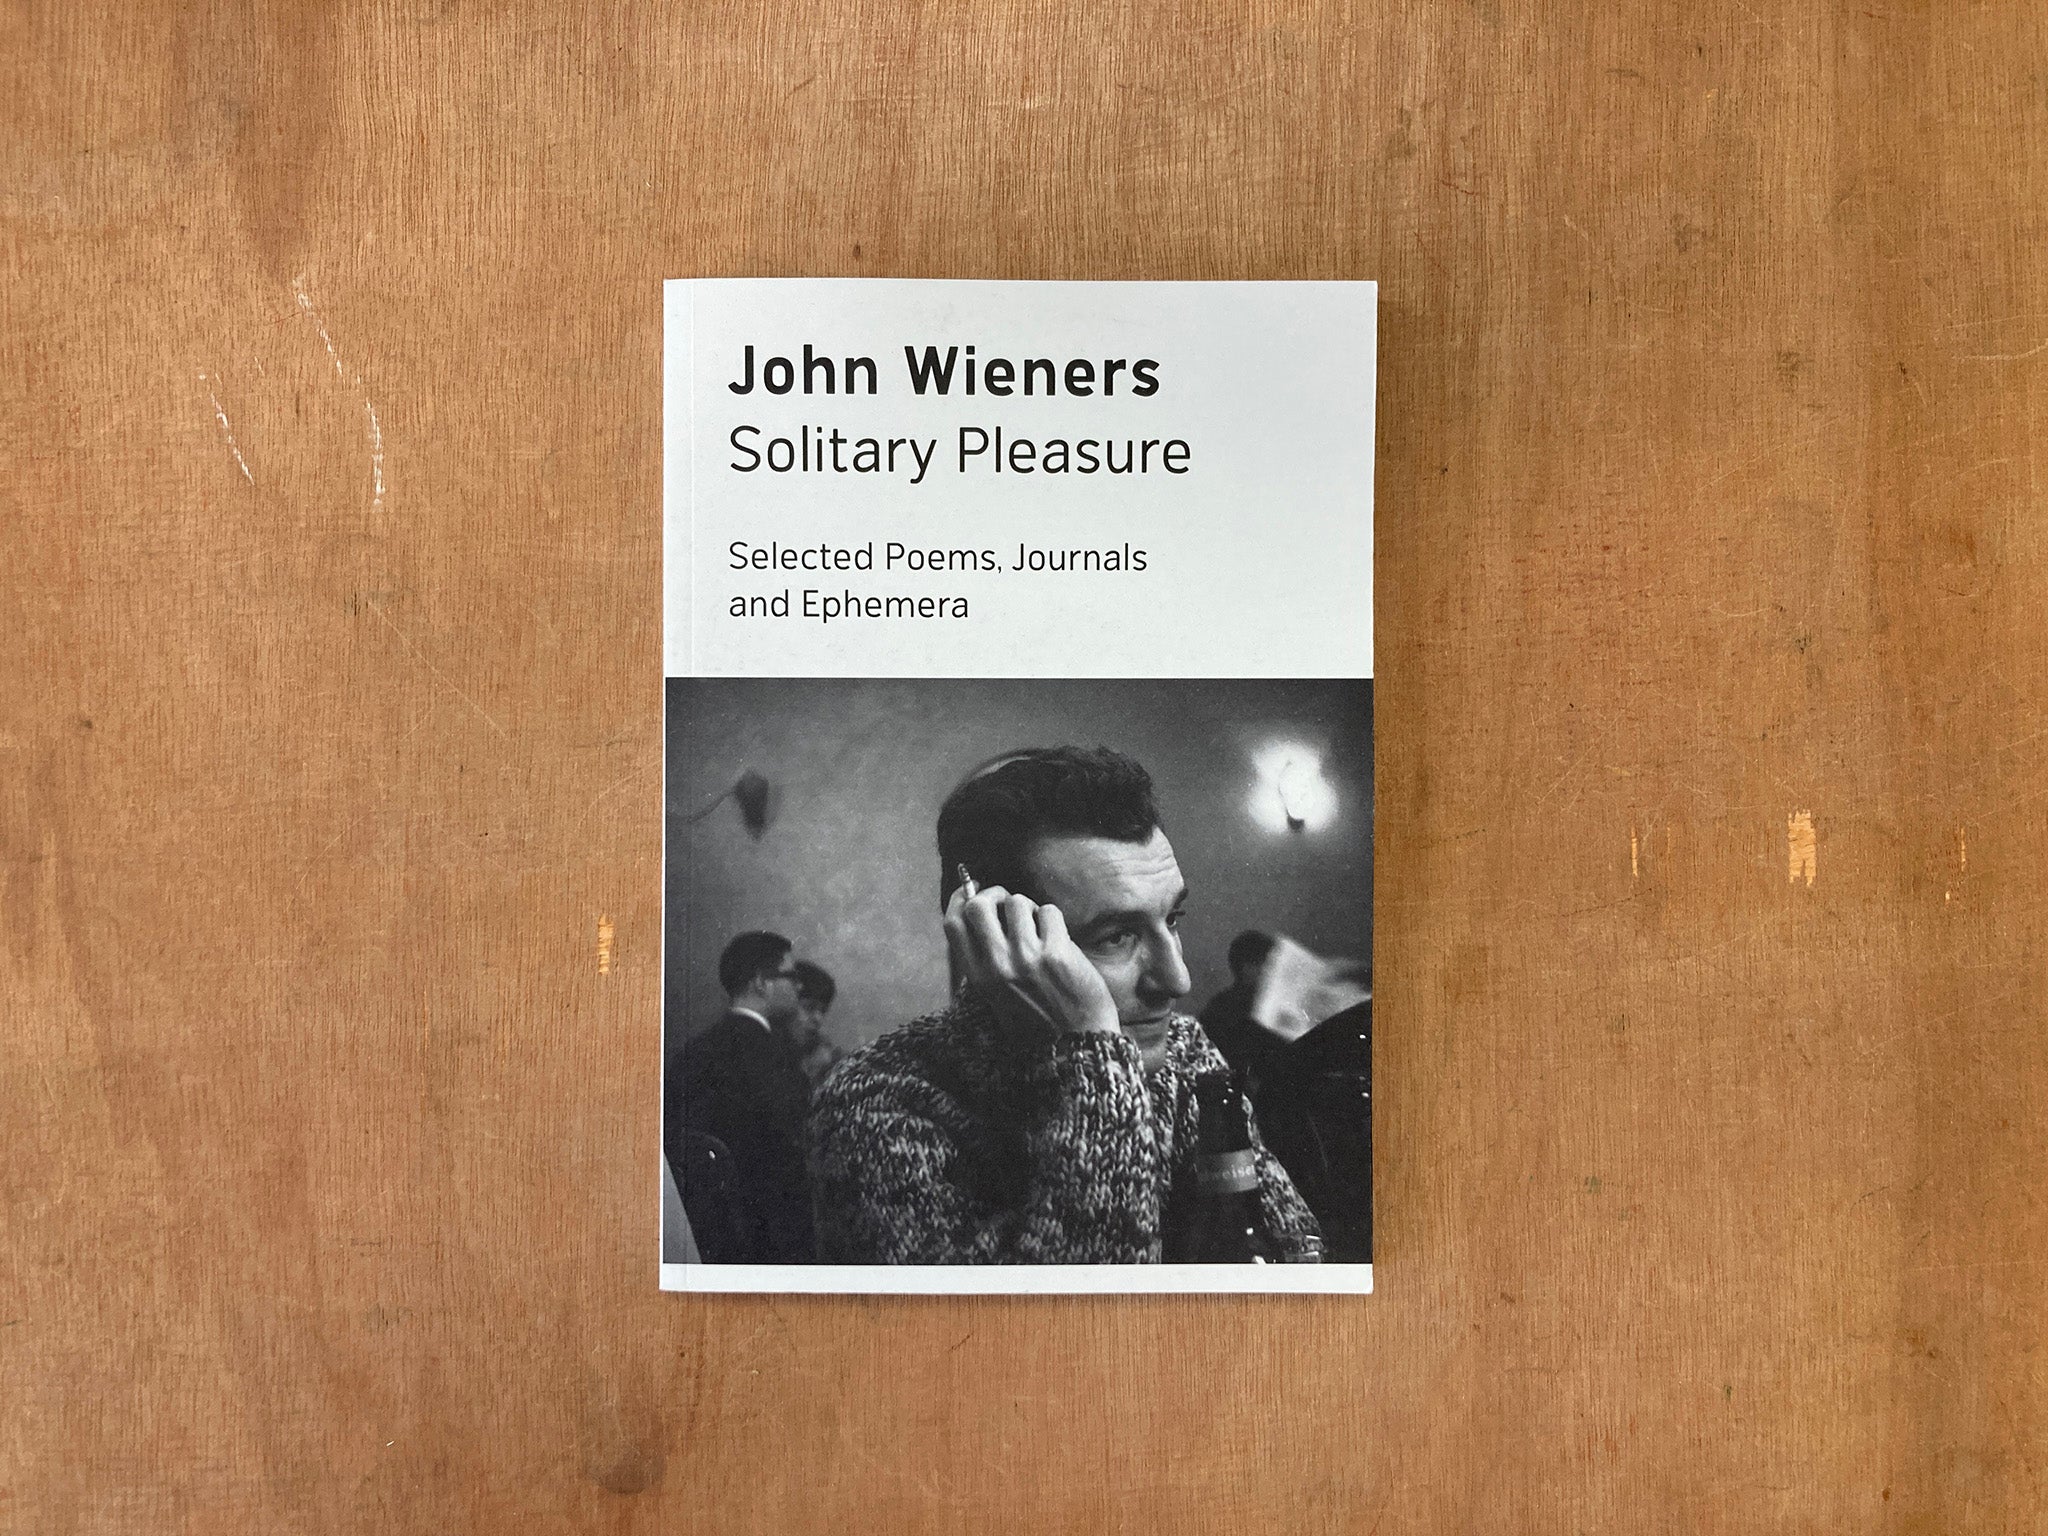 SOLITARY PLEASURE: SELECTED POEMS, JOURNALS AND EPHEMERA OF JOHN WIENERS